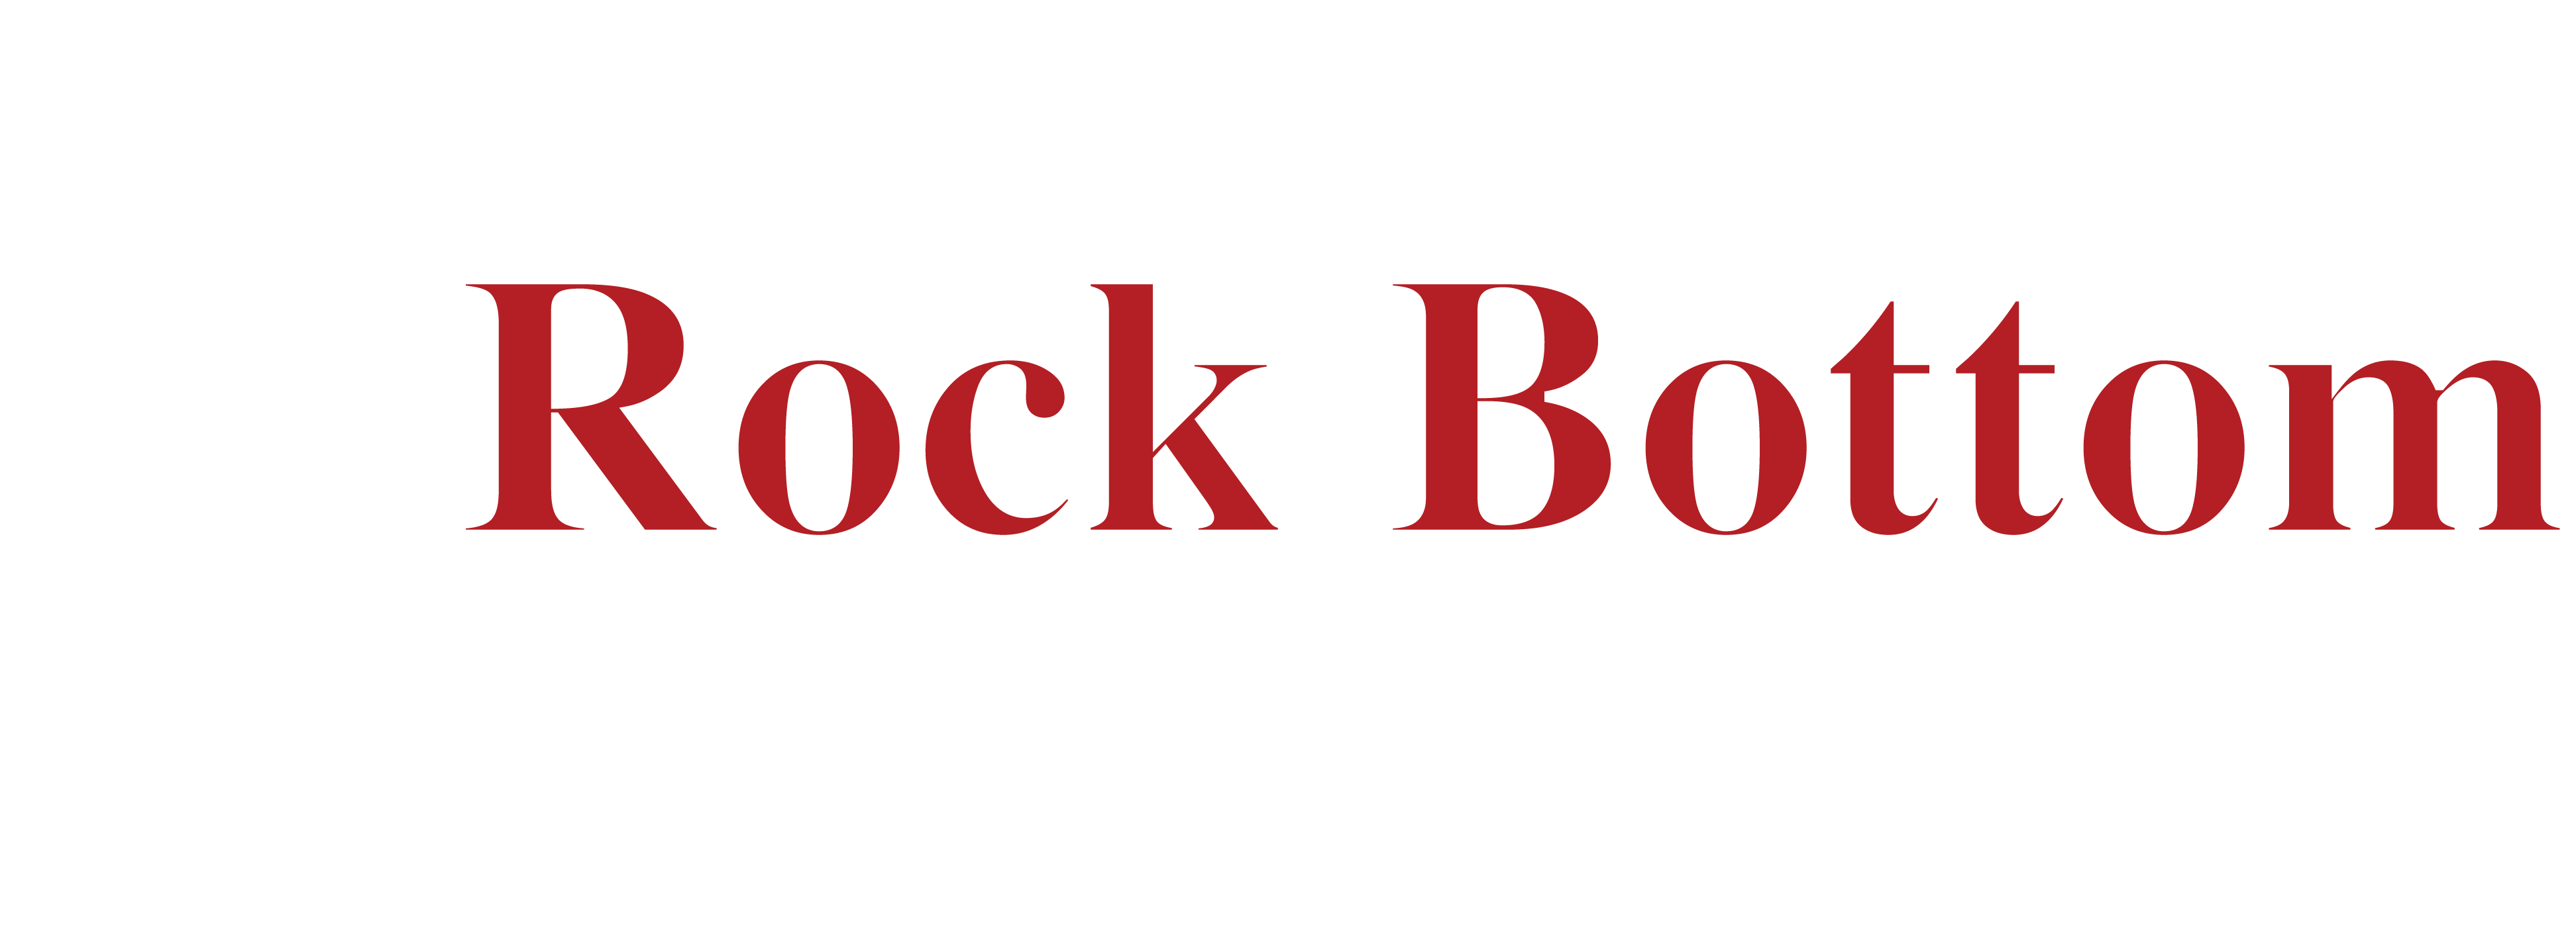 Rock Bottom Fishing Charters Logo